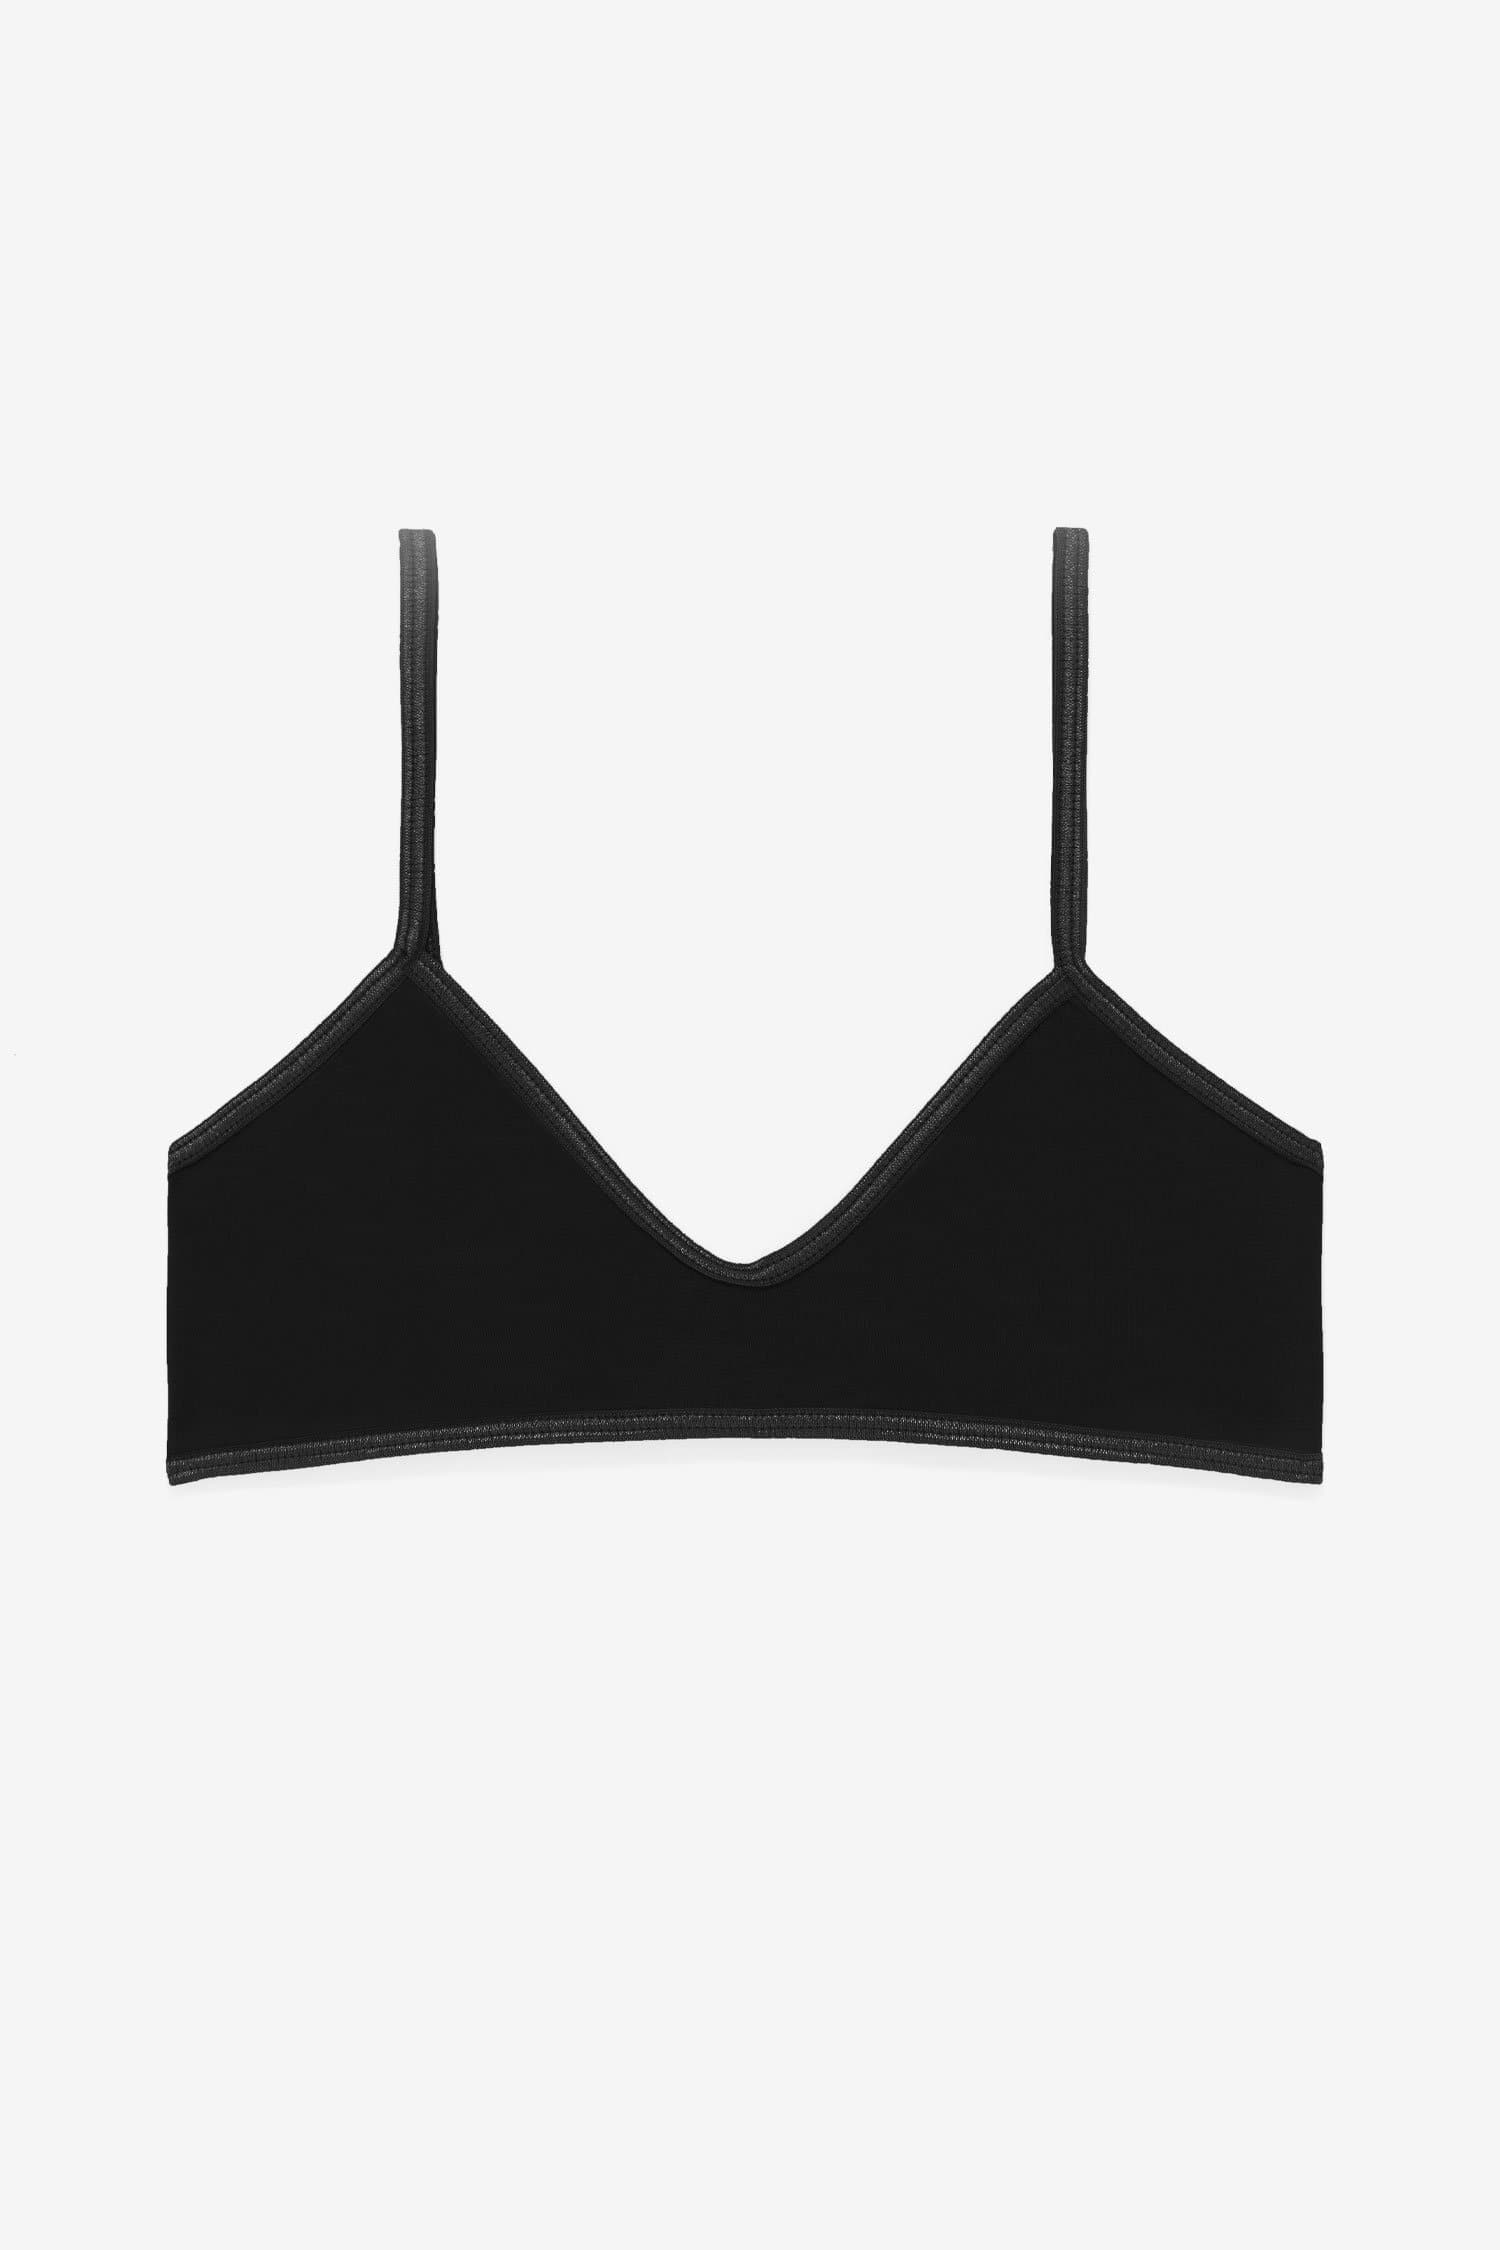 Wholesale online bra pakistan For Supportive Underwear 